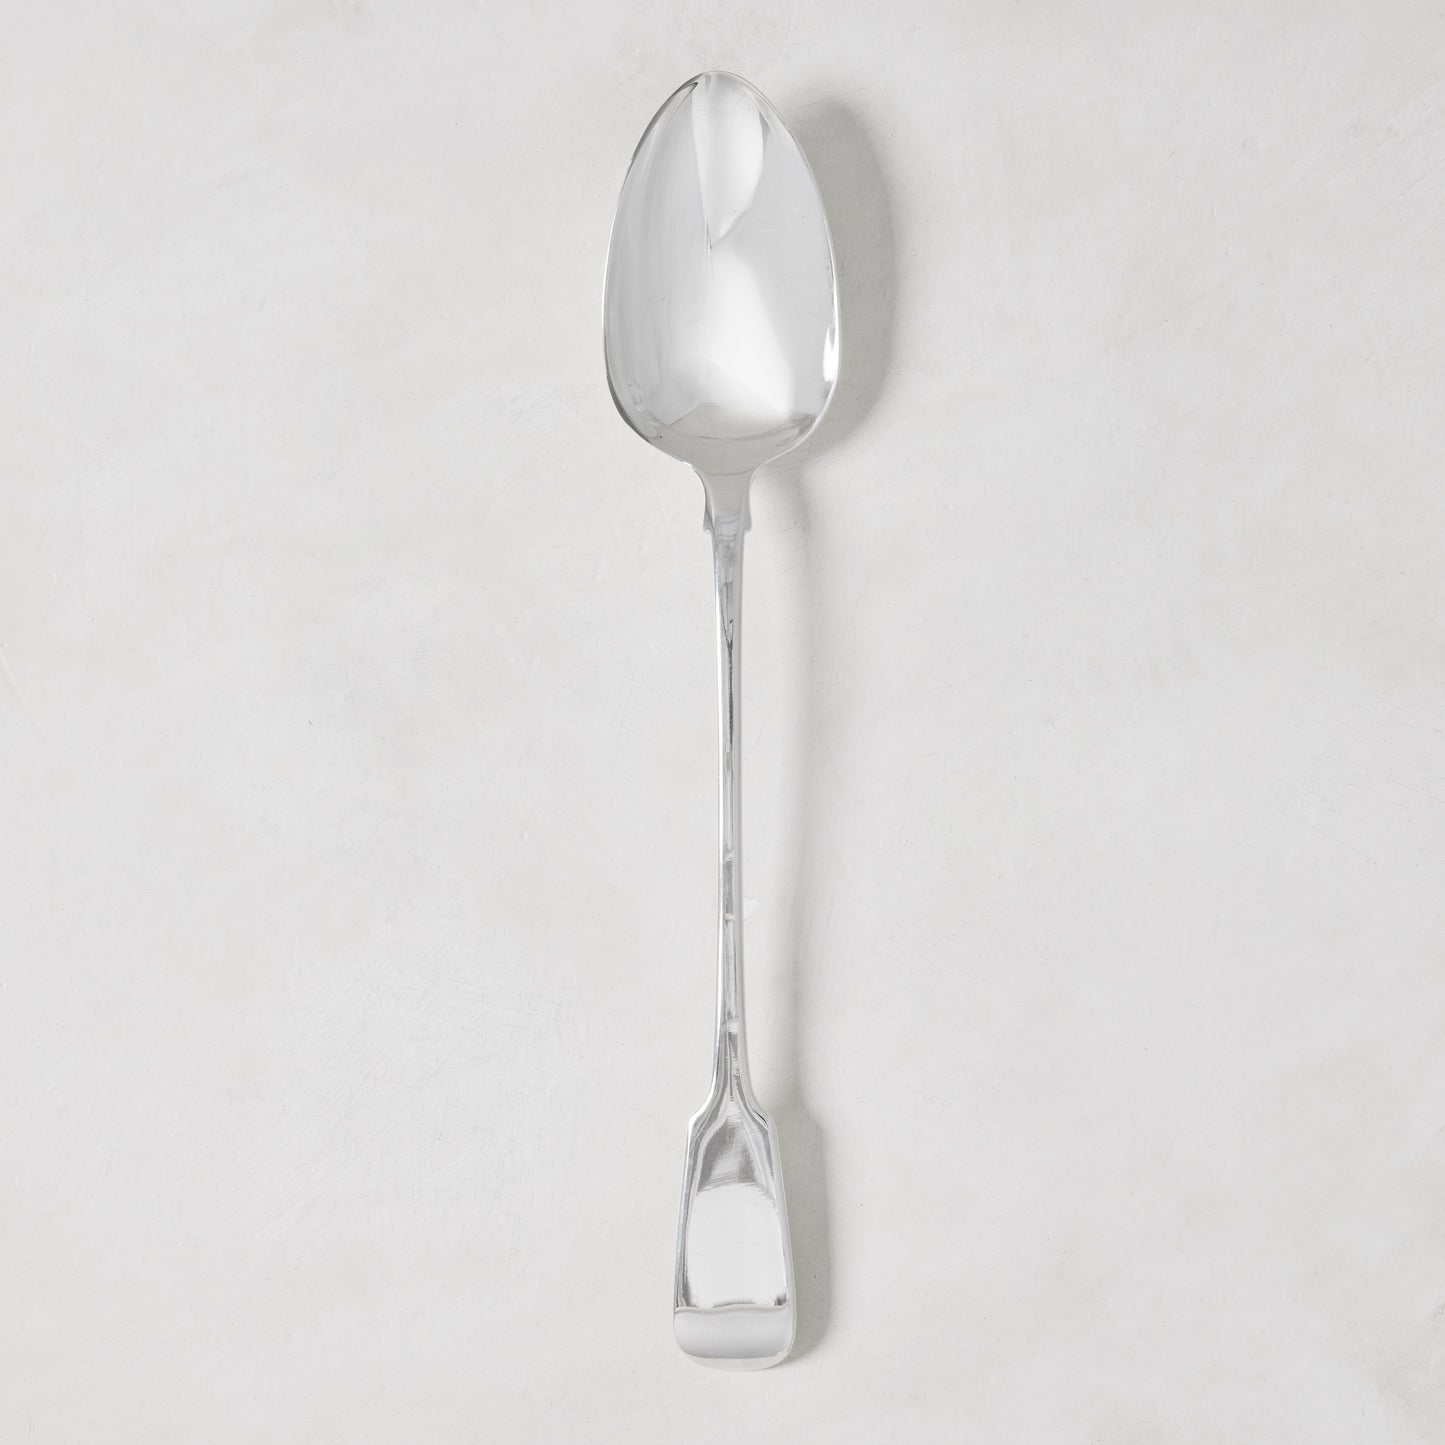 Vintage Silverplate Serving Spoon, 12.5"L